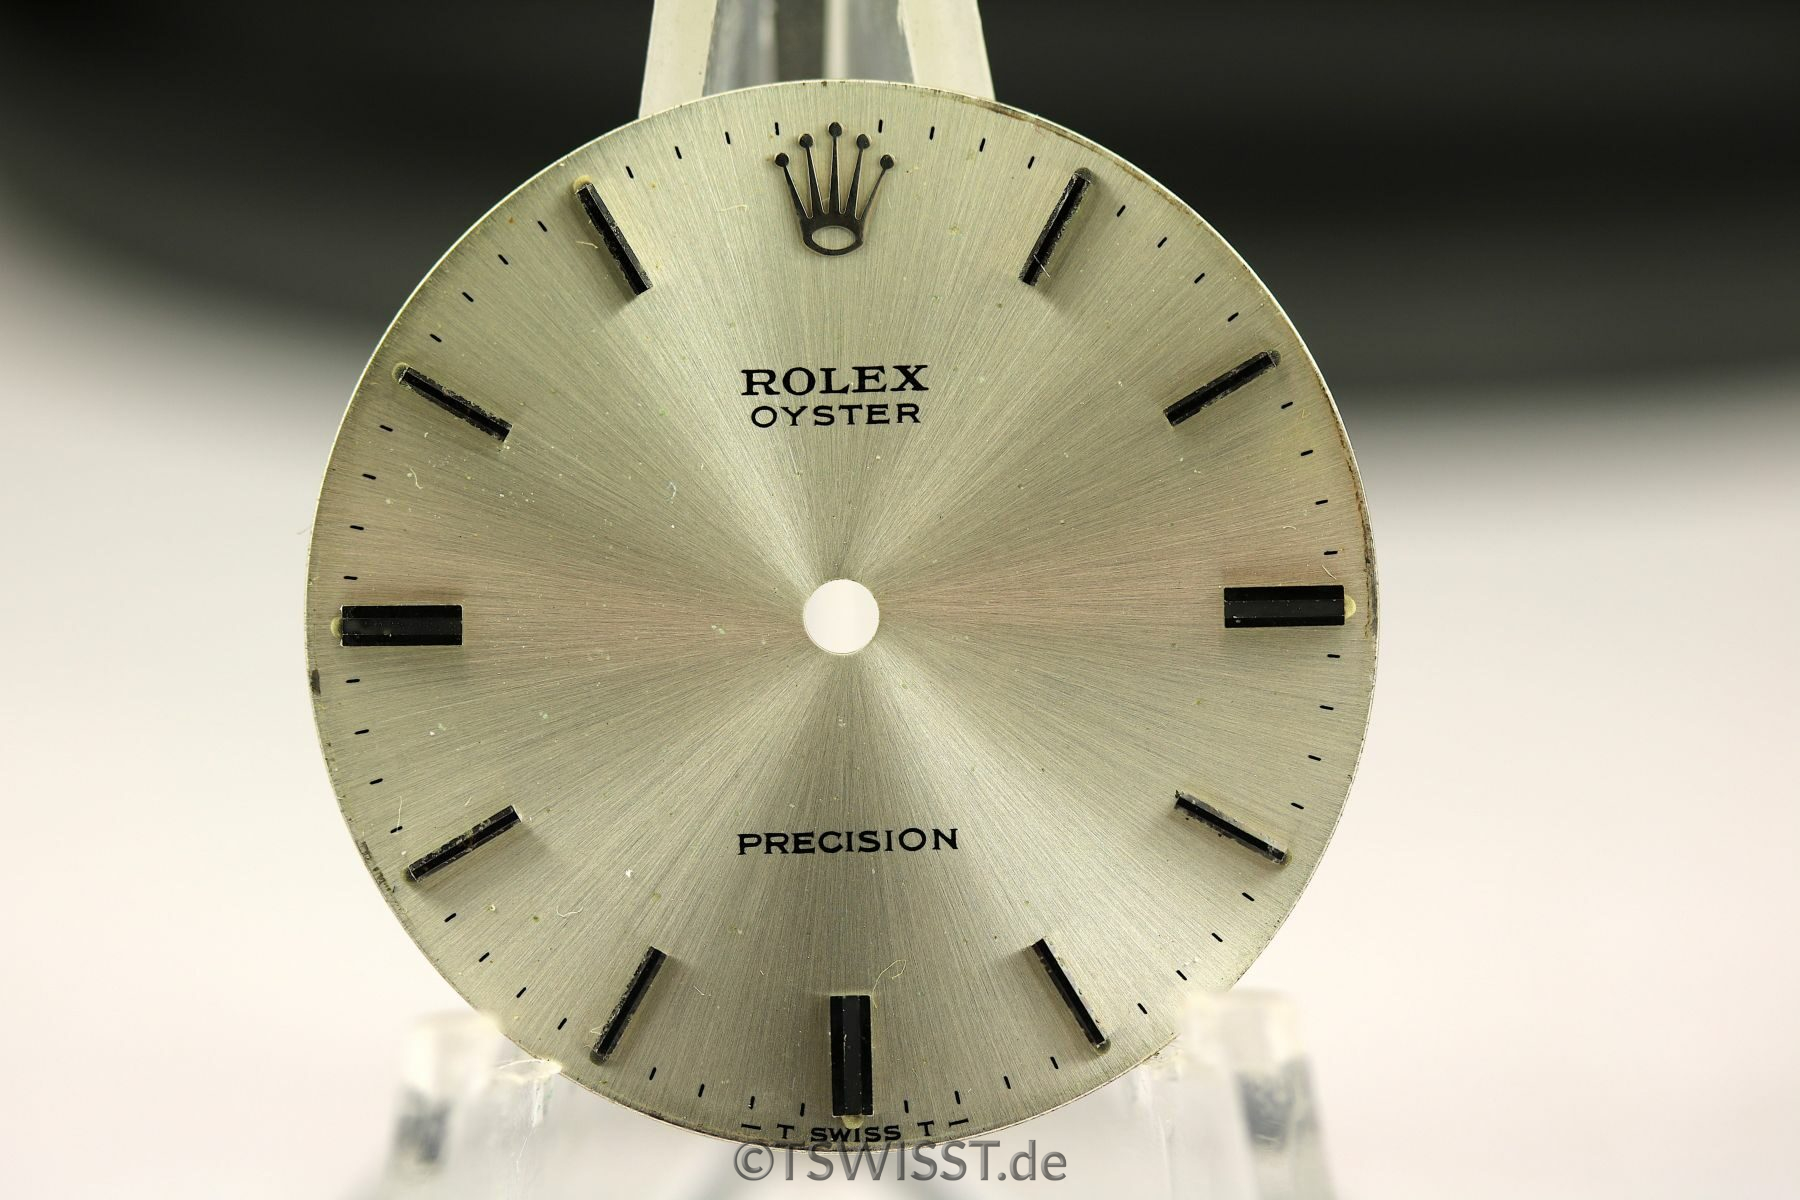 Rolex OP Precision dial